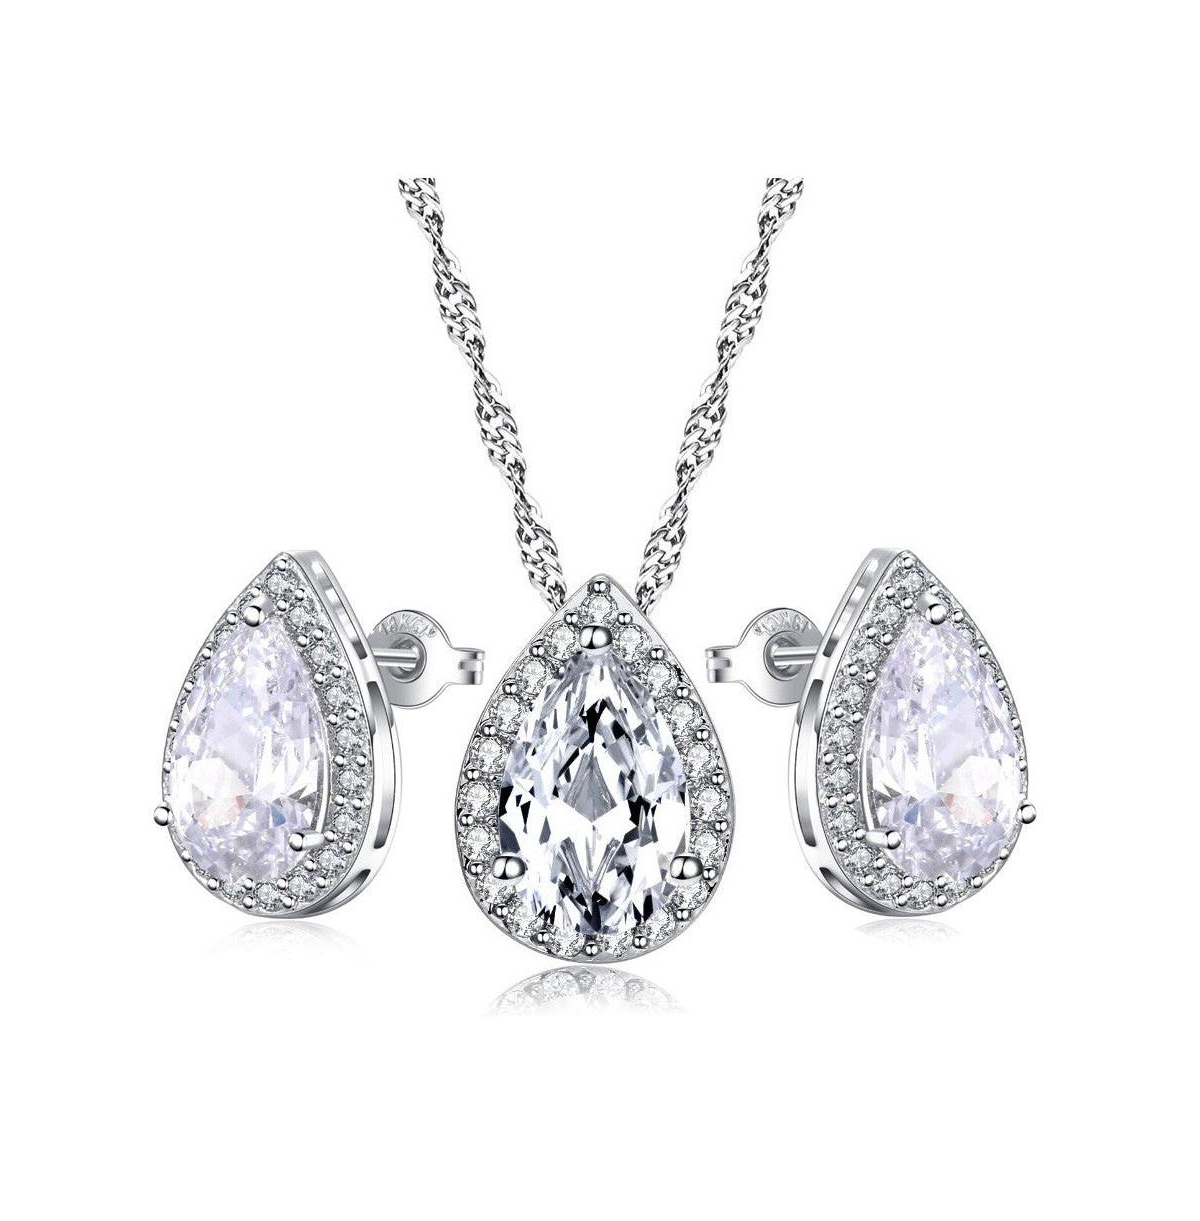 Teardrop Crystal Necklace and Teardrop Crystal Earring Set - Silver